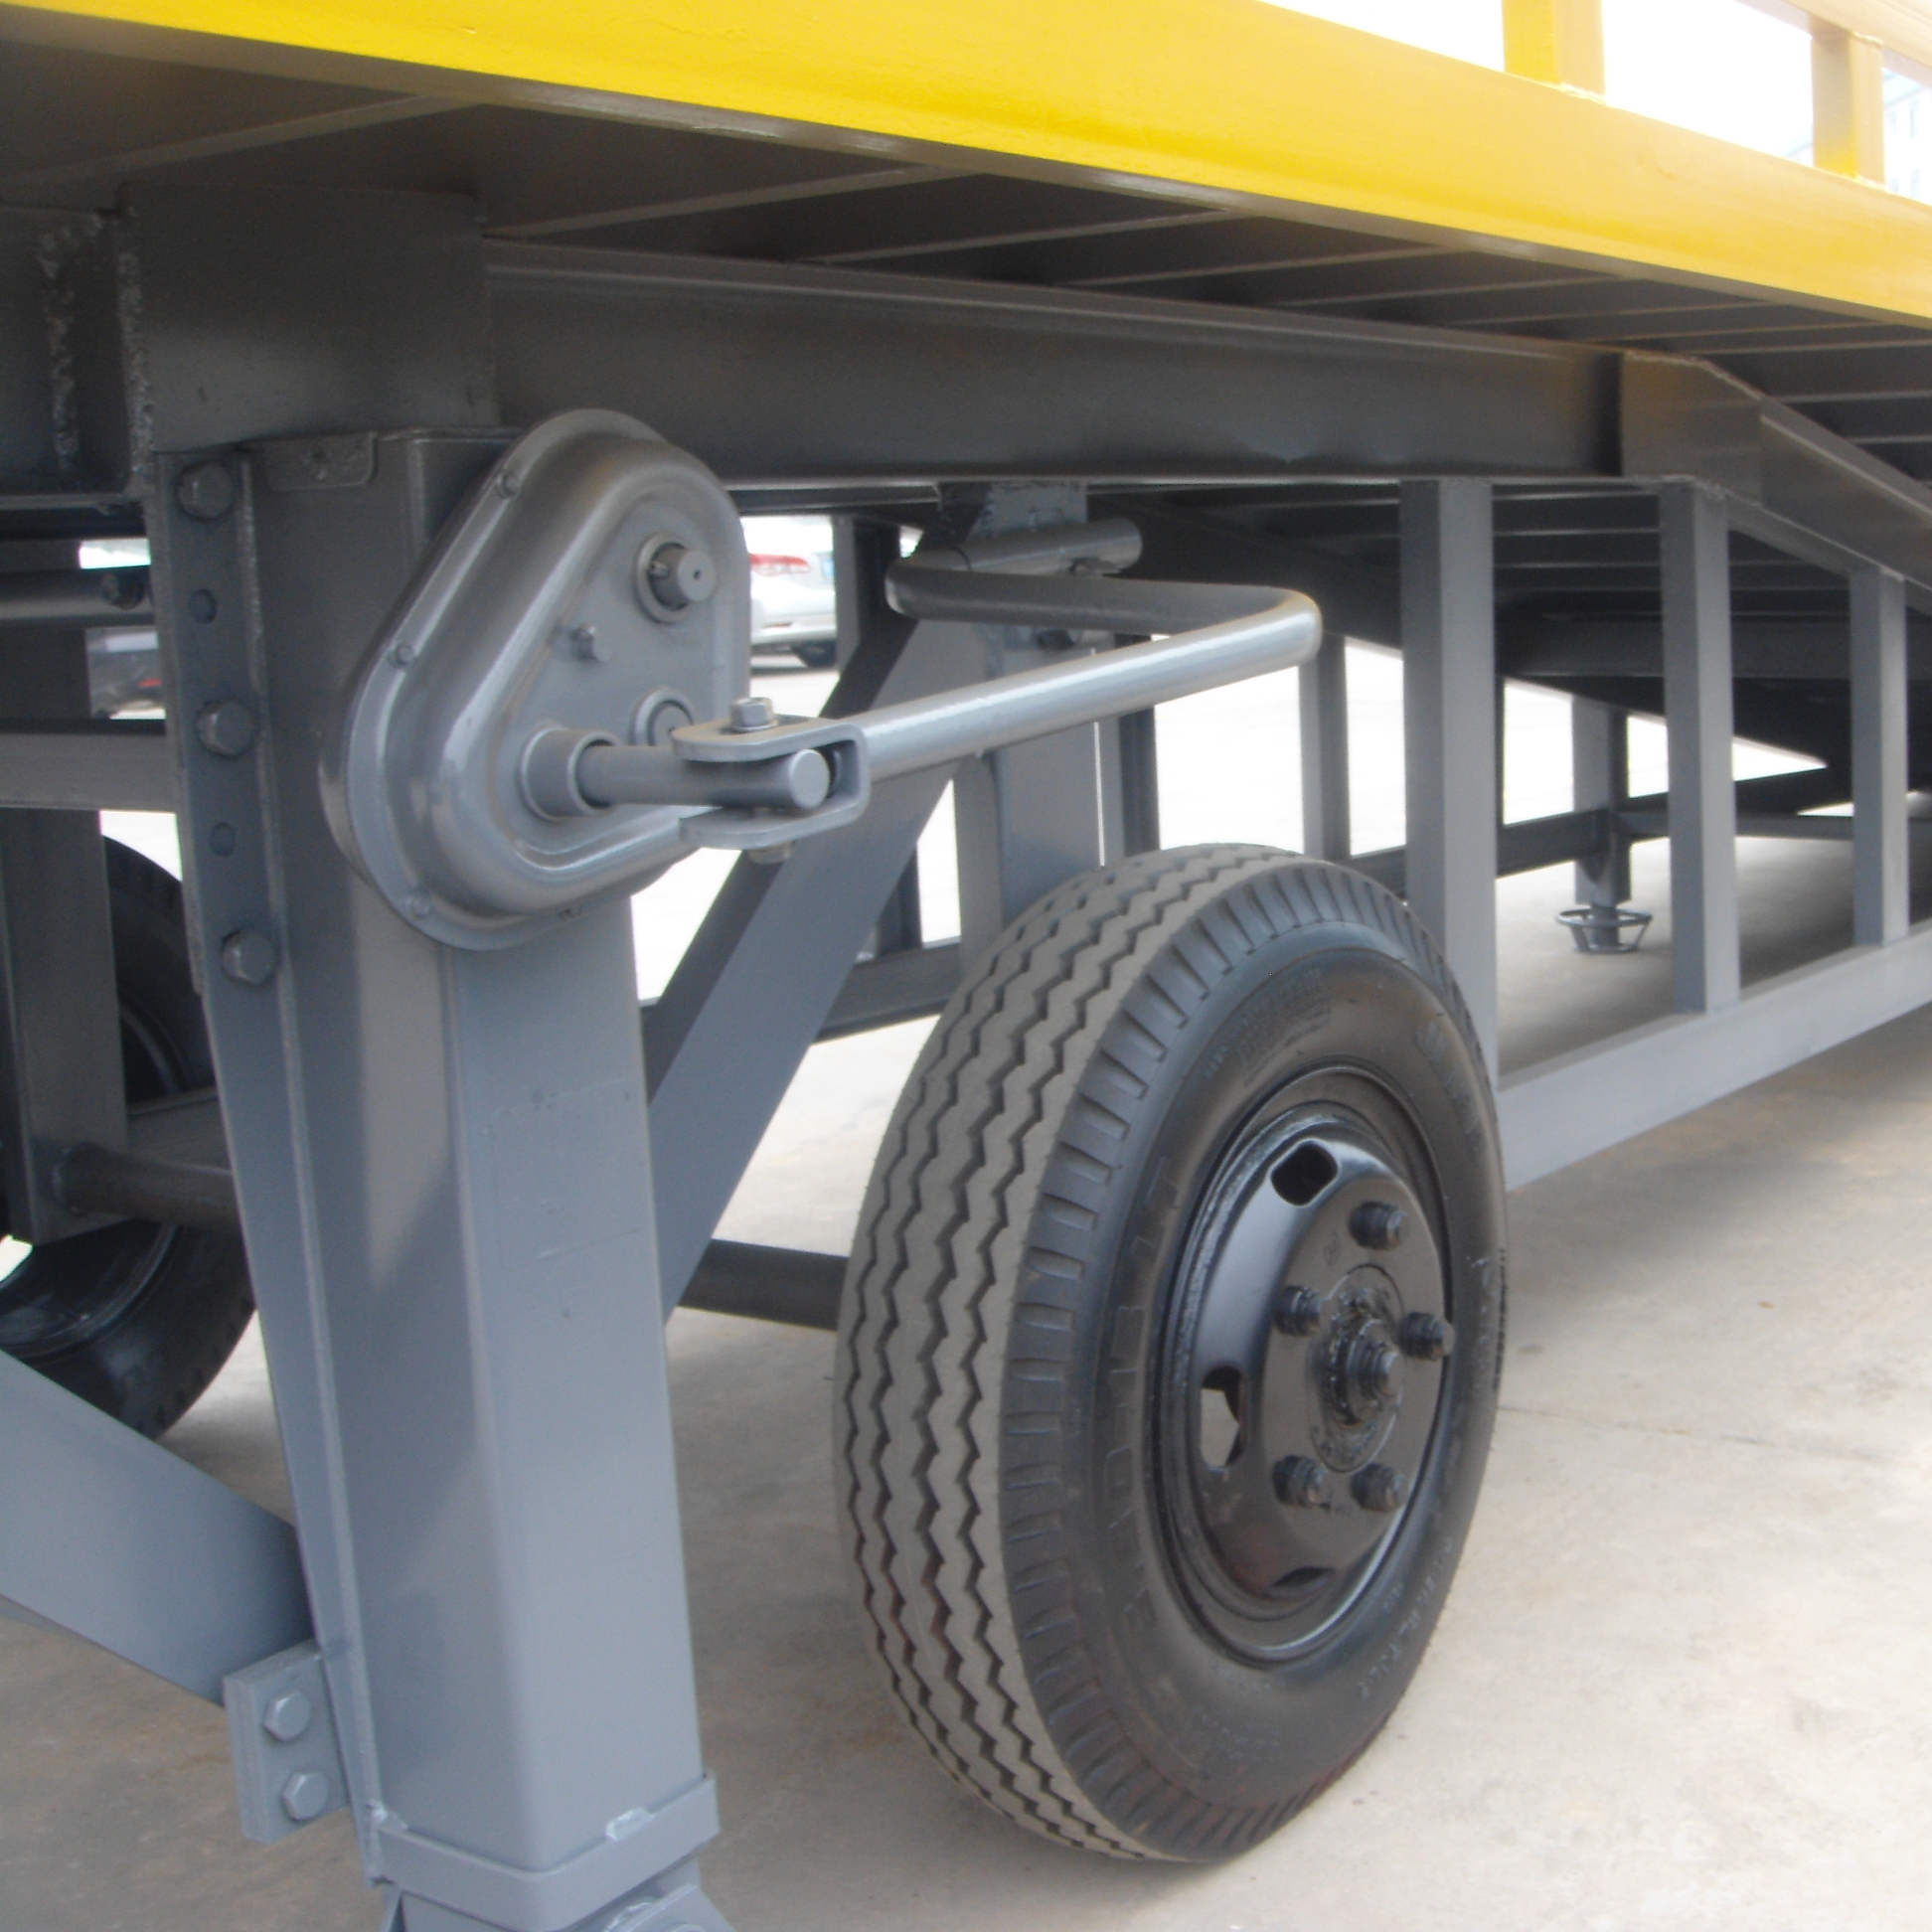 NIULI 10 Ton Mobile Yard Loading Ramp Adjustable Height Forklift Container Dock Ramp